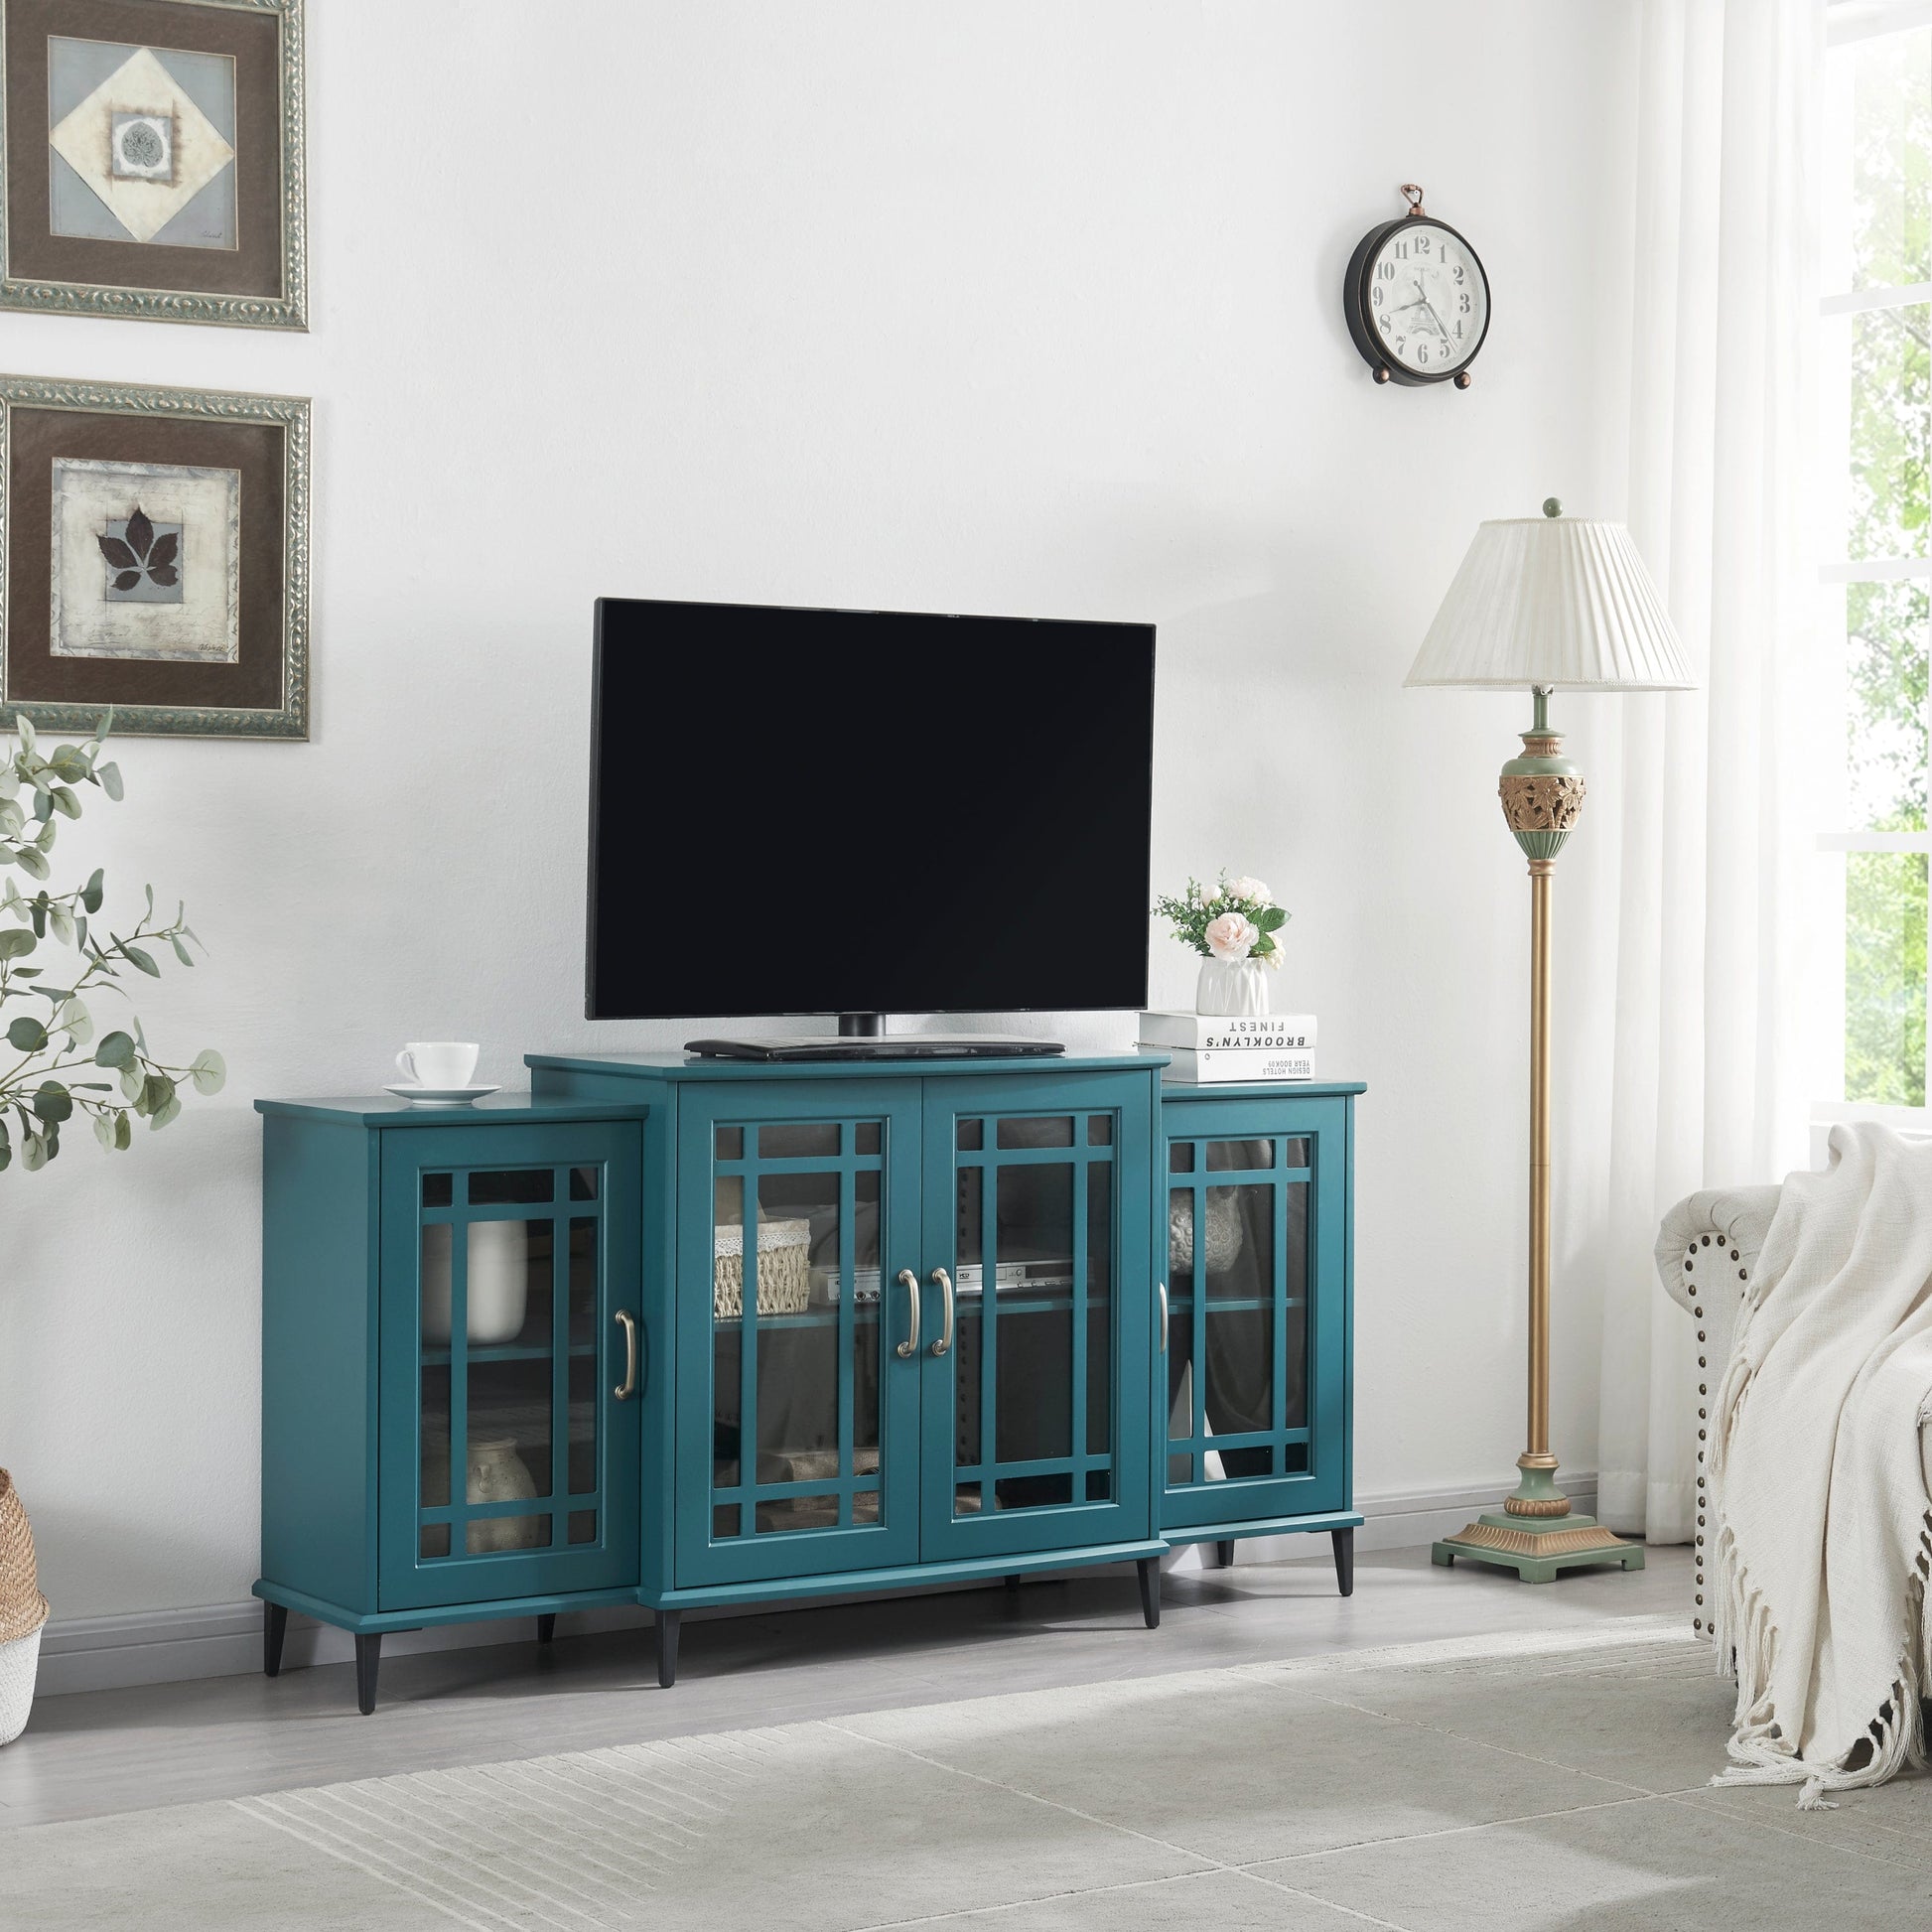 1st Choice Furniture Direct Storage Cabinet 1st Choice Multifunctional Storage Cabinet in Teal Blue w/ Glass Door